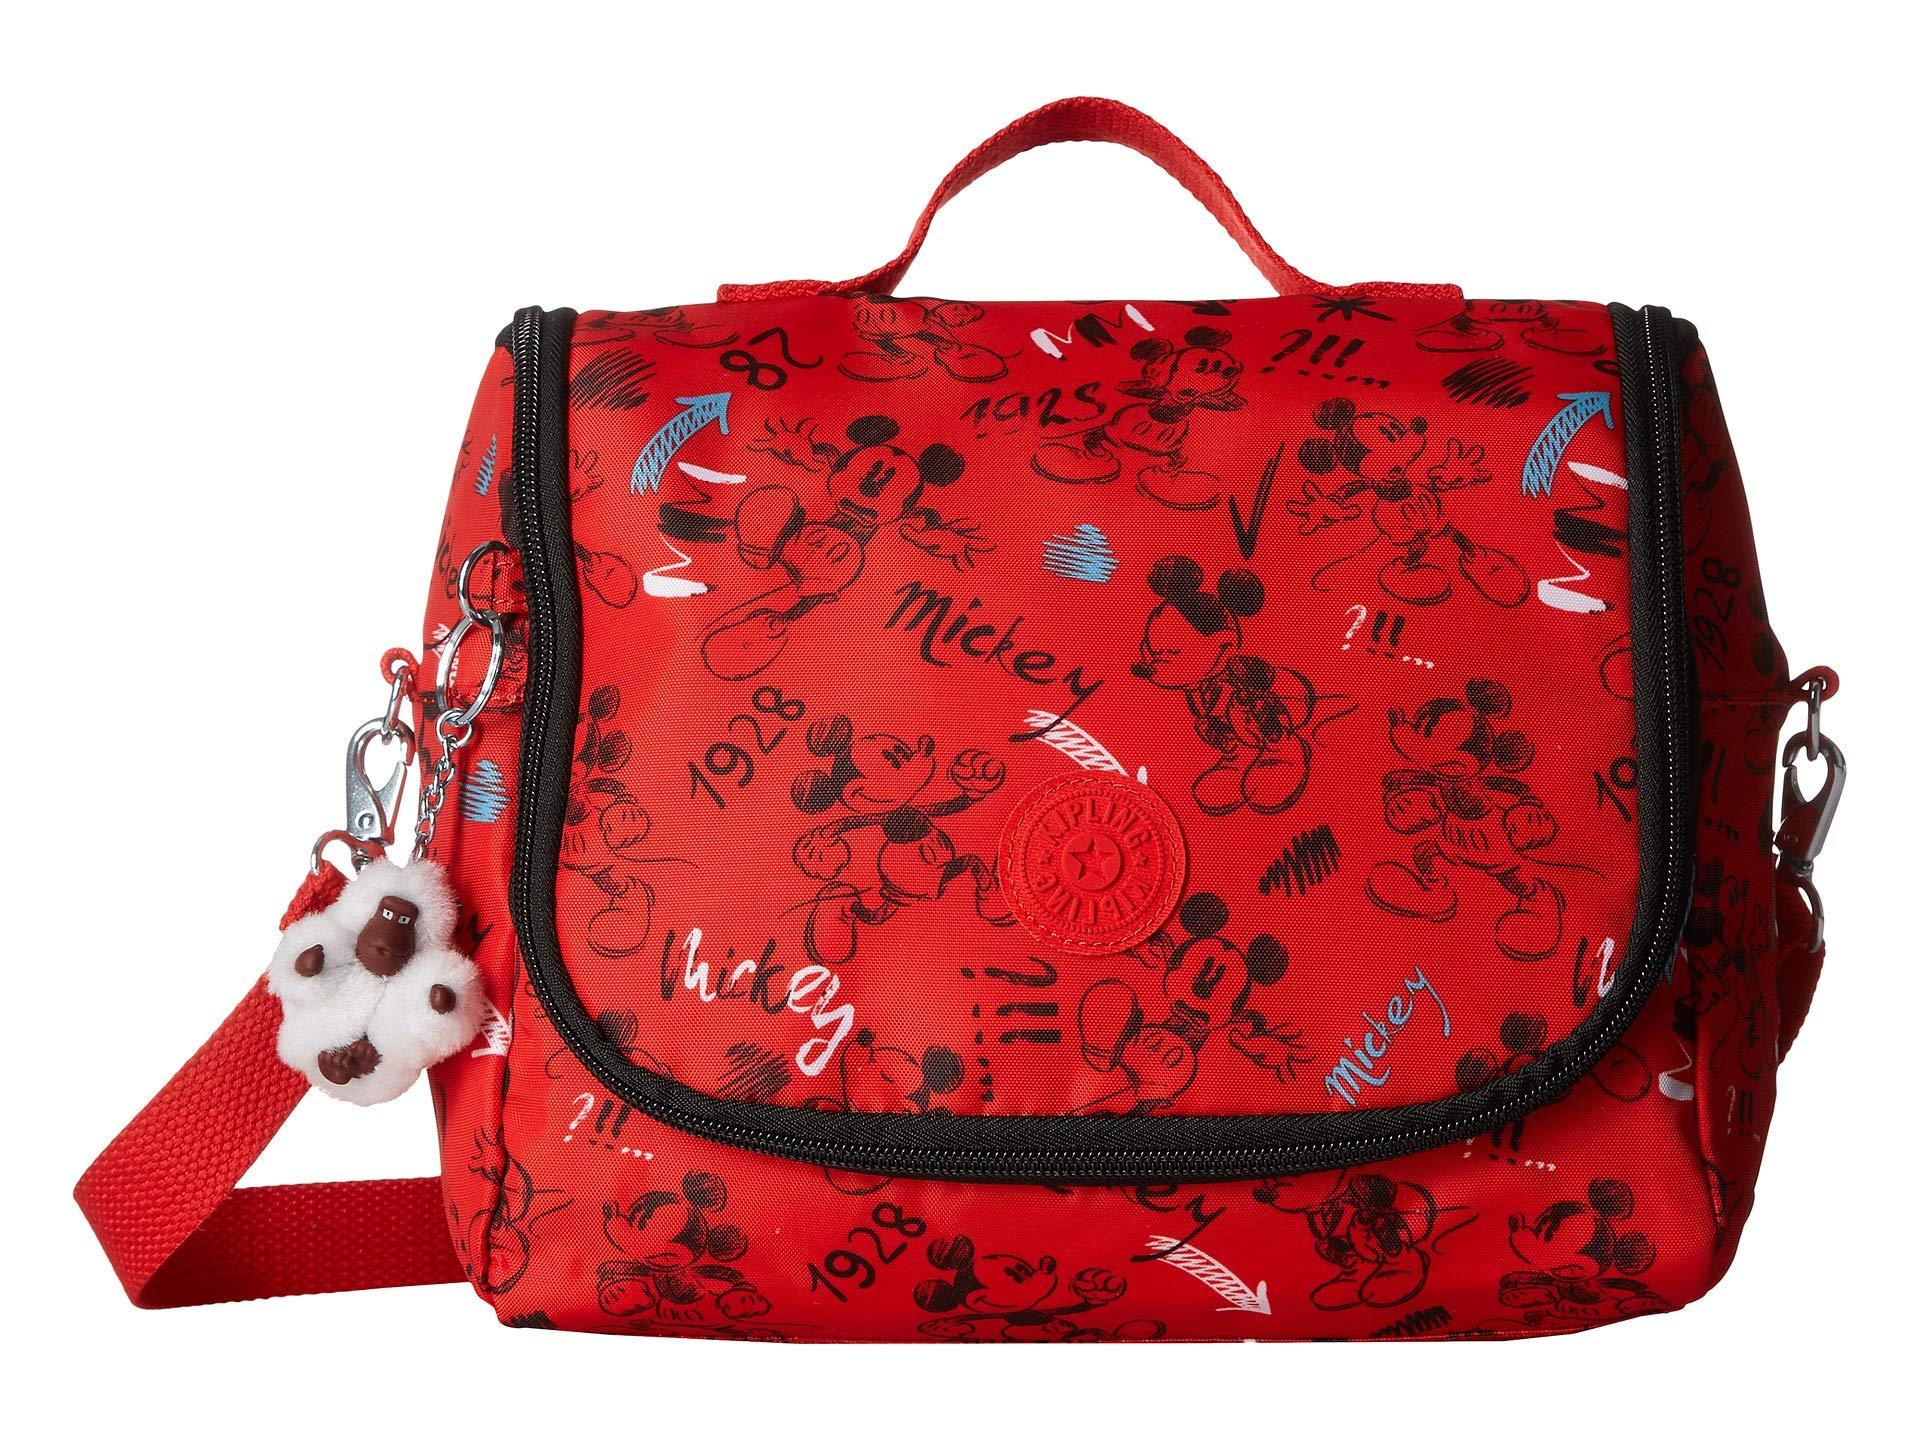 Lyst - Kipling Disney Mickey Mouse Kichirou Lunch Bag (sketch Red) Bags in Red